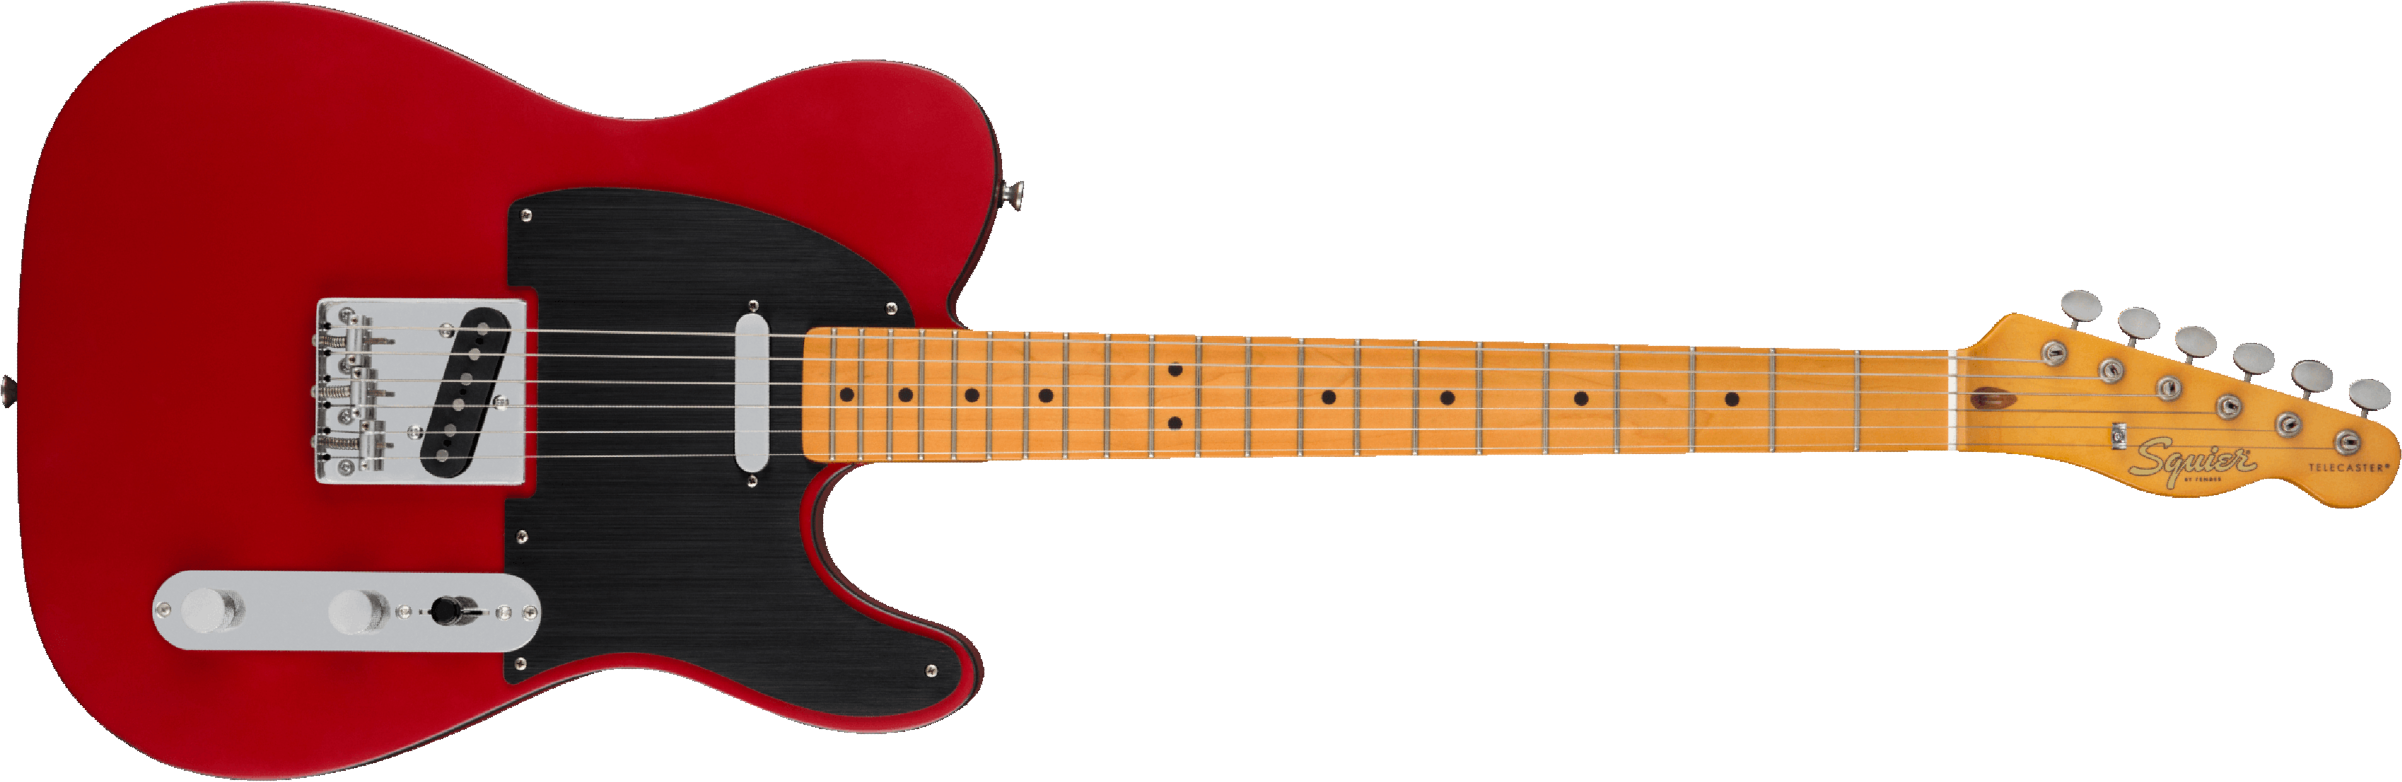 Squier Tele 40th Anniversary Vintage Edition Mn - Satin Dakota Red - Guitarra eléctrica con forma de tel - Main picture